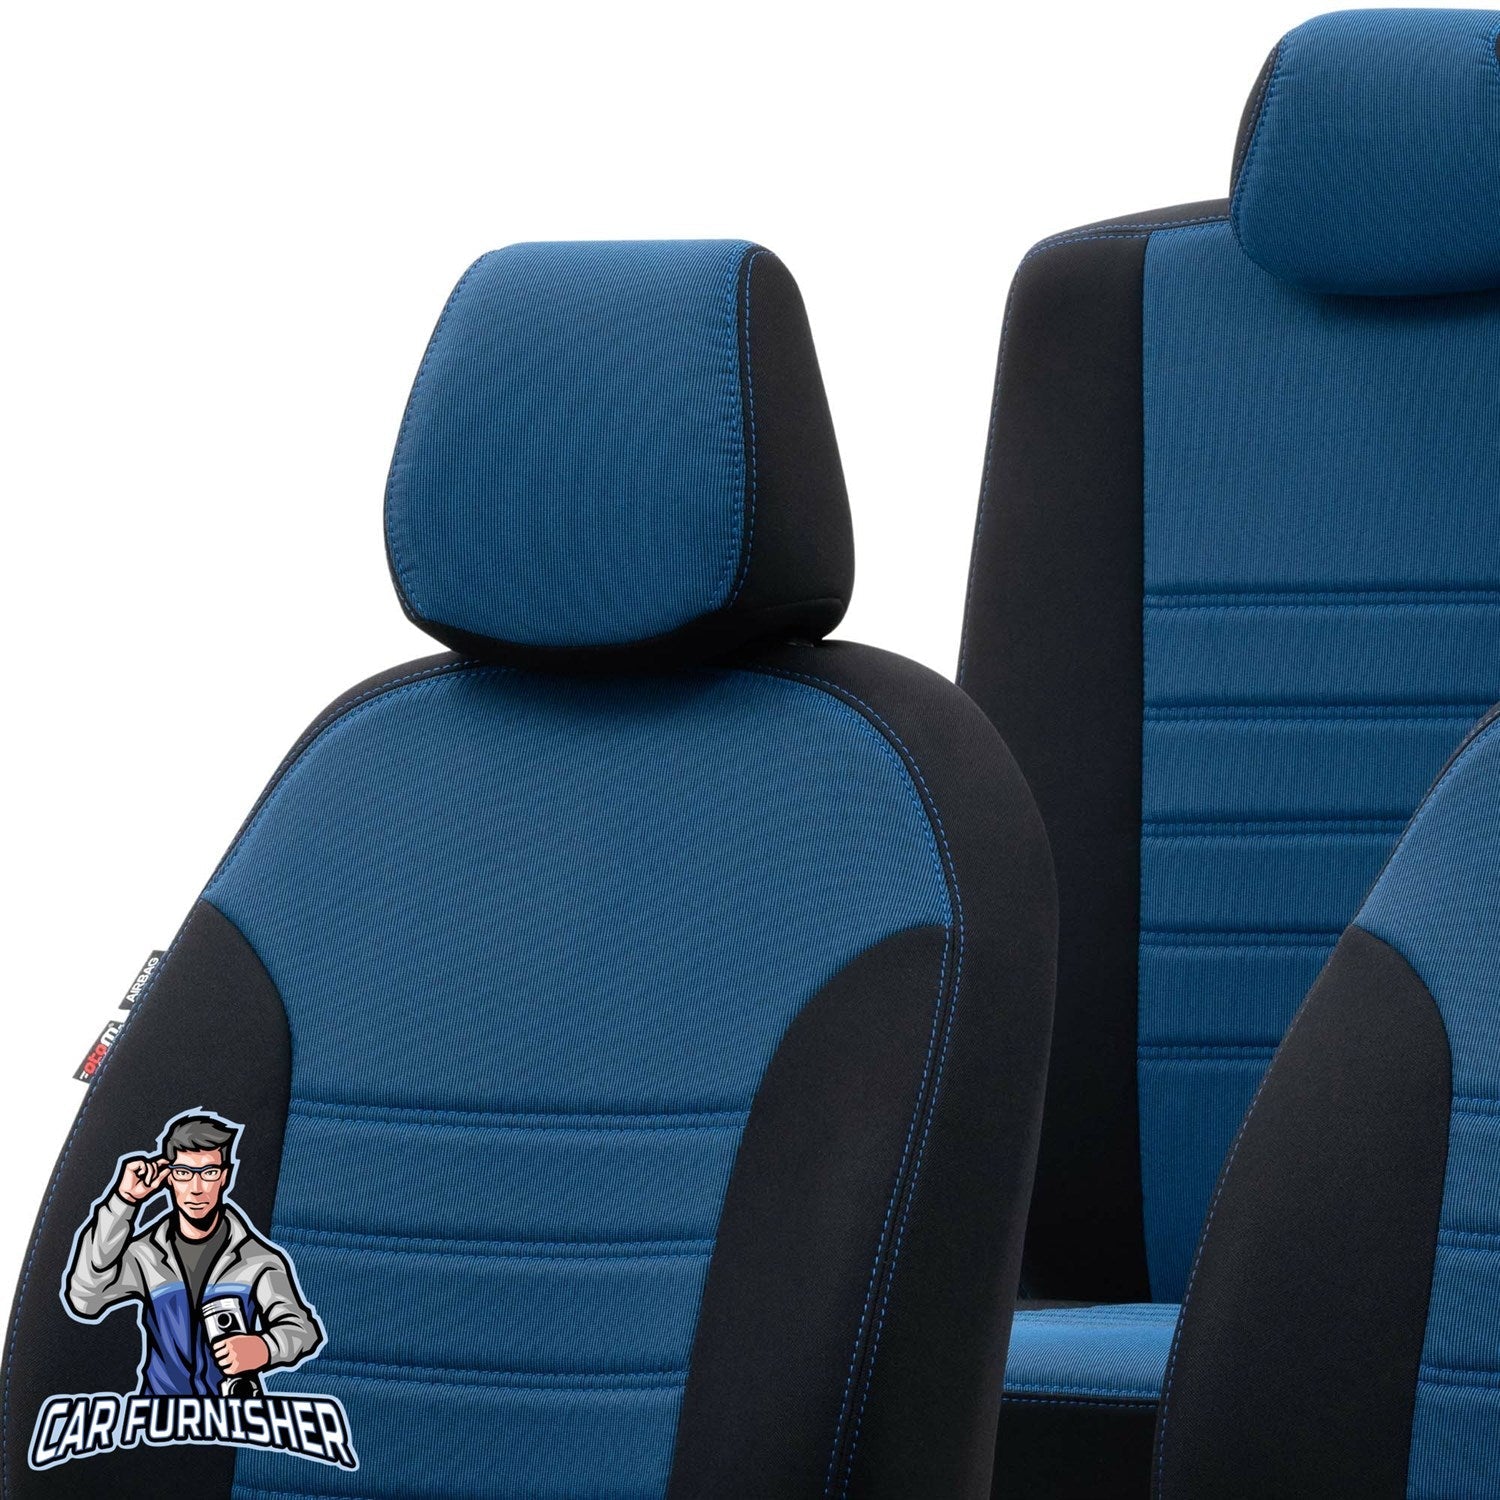 Toyota Hilux Seat Cover Original Jacquard Design Blue Jacquard Fabric